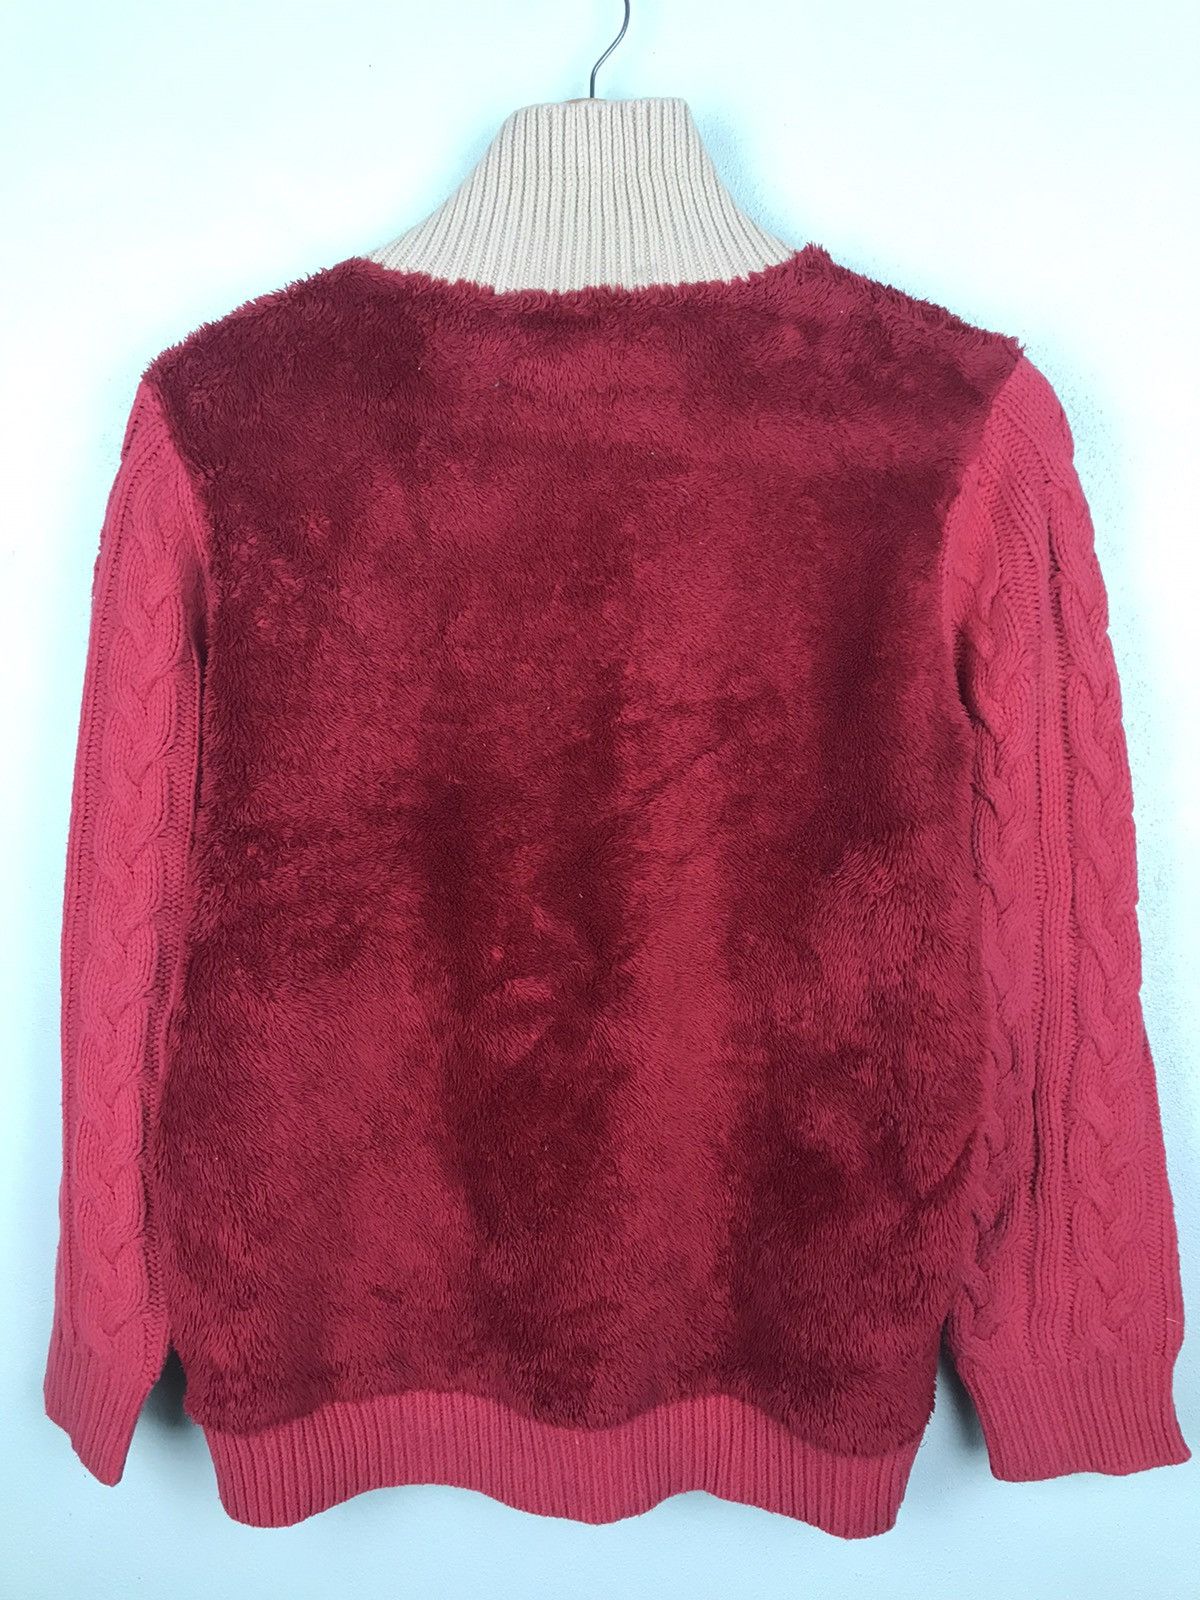 LAST DROP!Uniqlo undercover faux fur cable knit sweater-1519 - 4